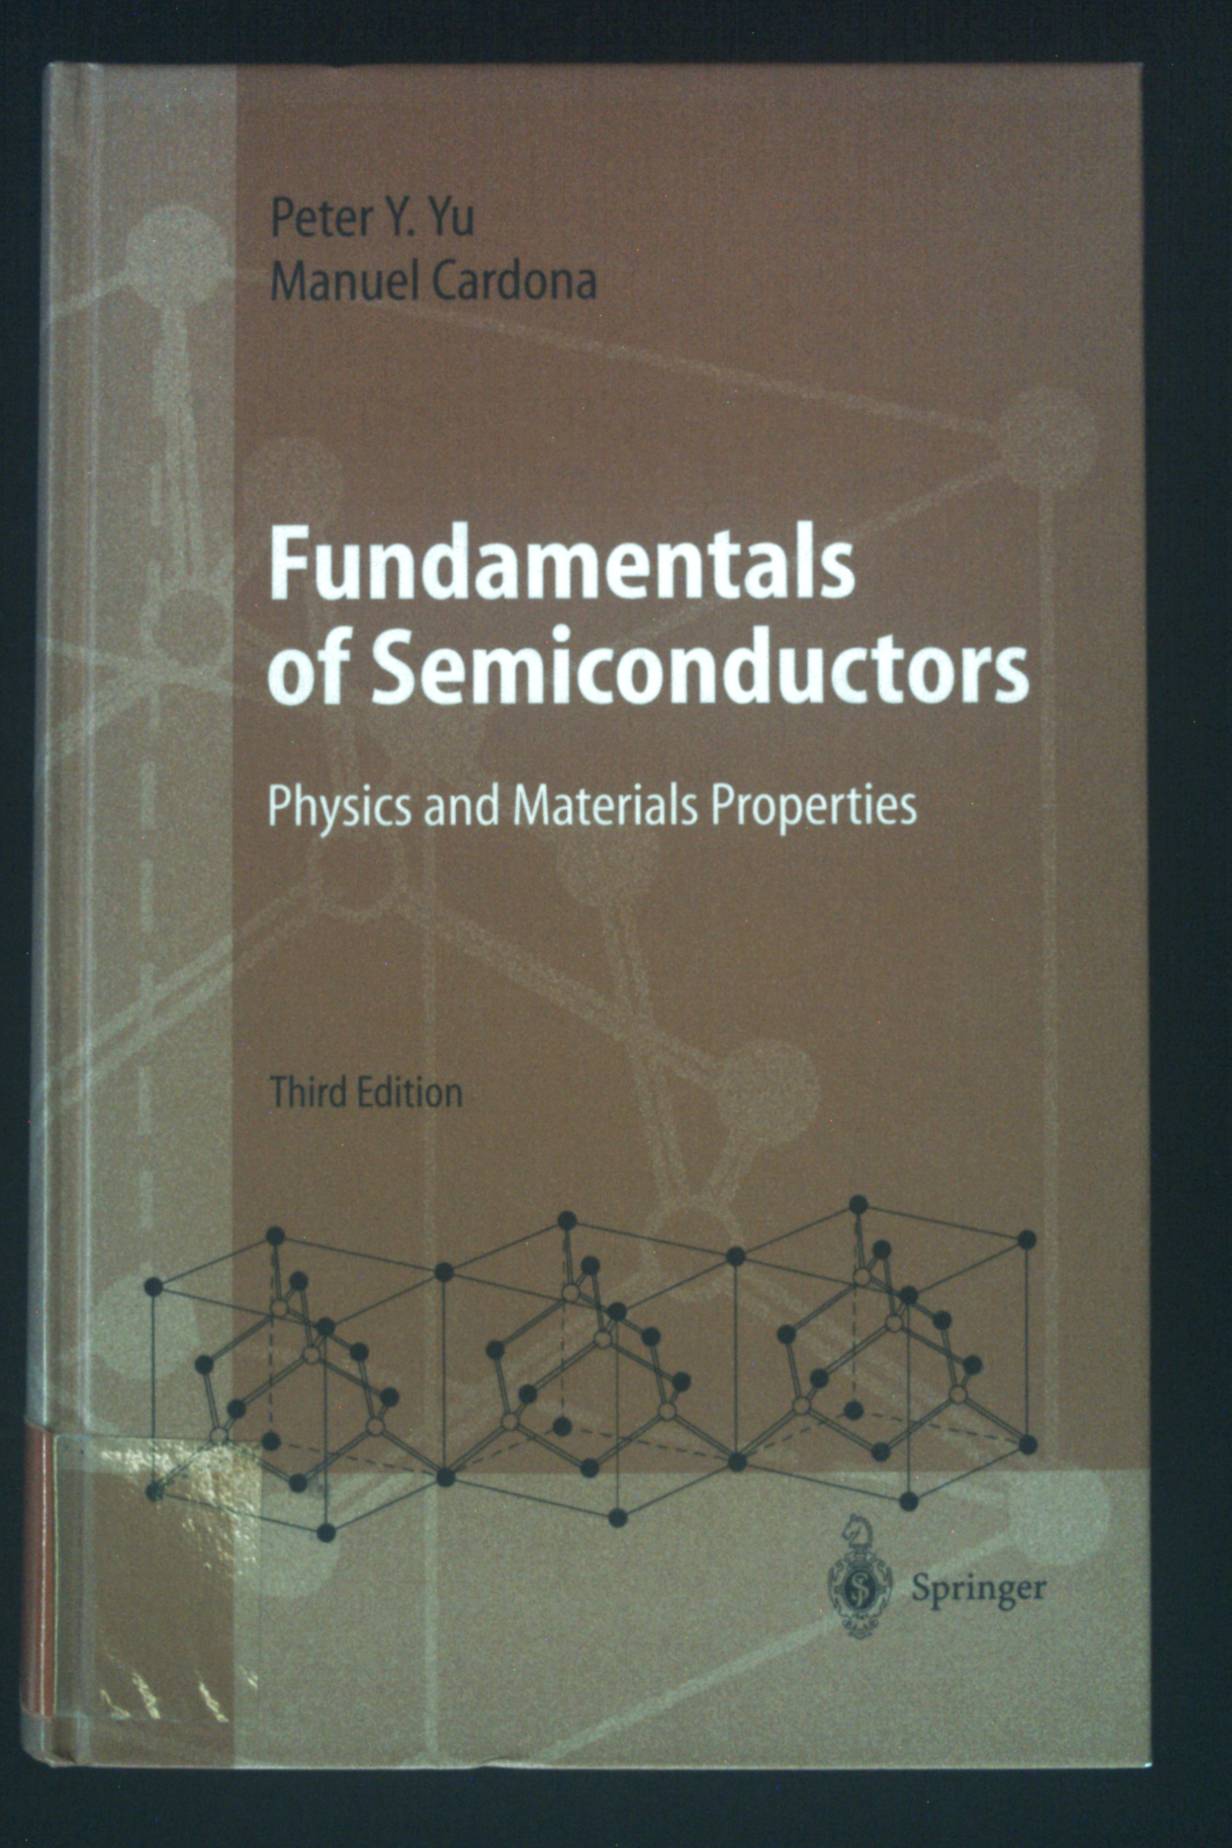 Fundamentals of Semiconductors: Physics and Materials Properties. Graduate Texts in Physics - YU, Peter and Manuel Cardona